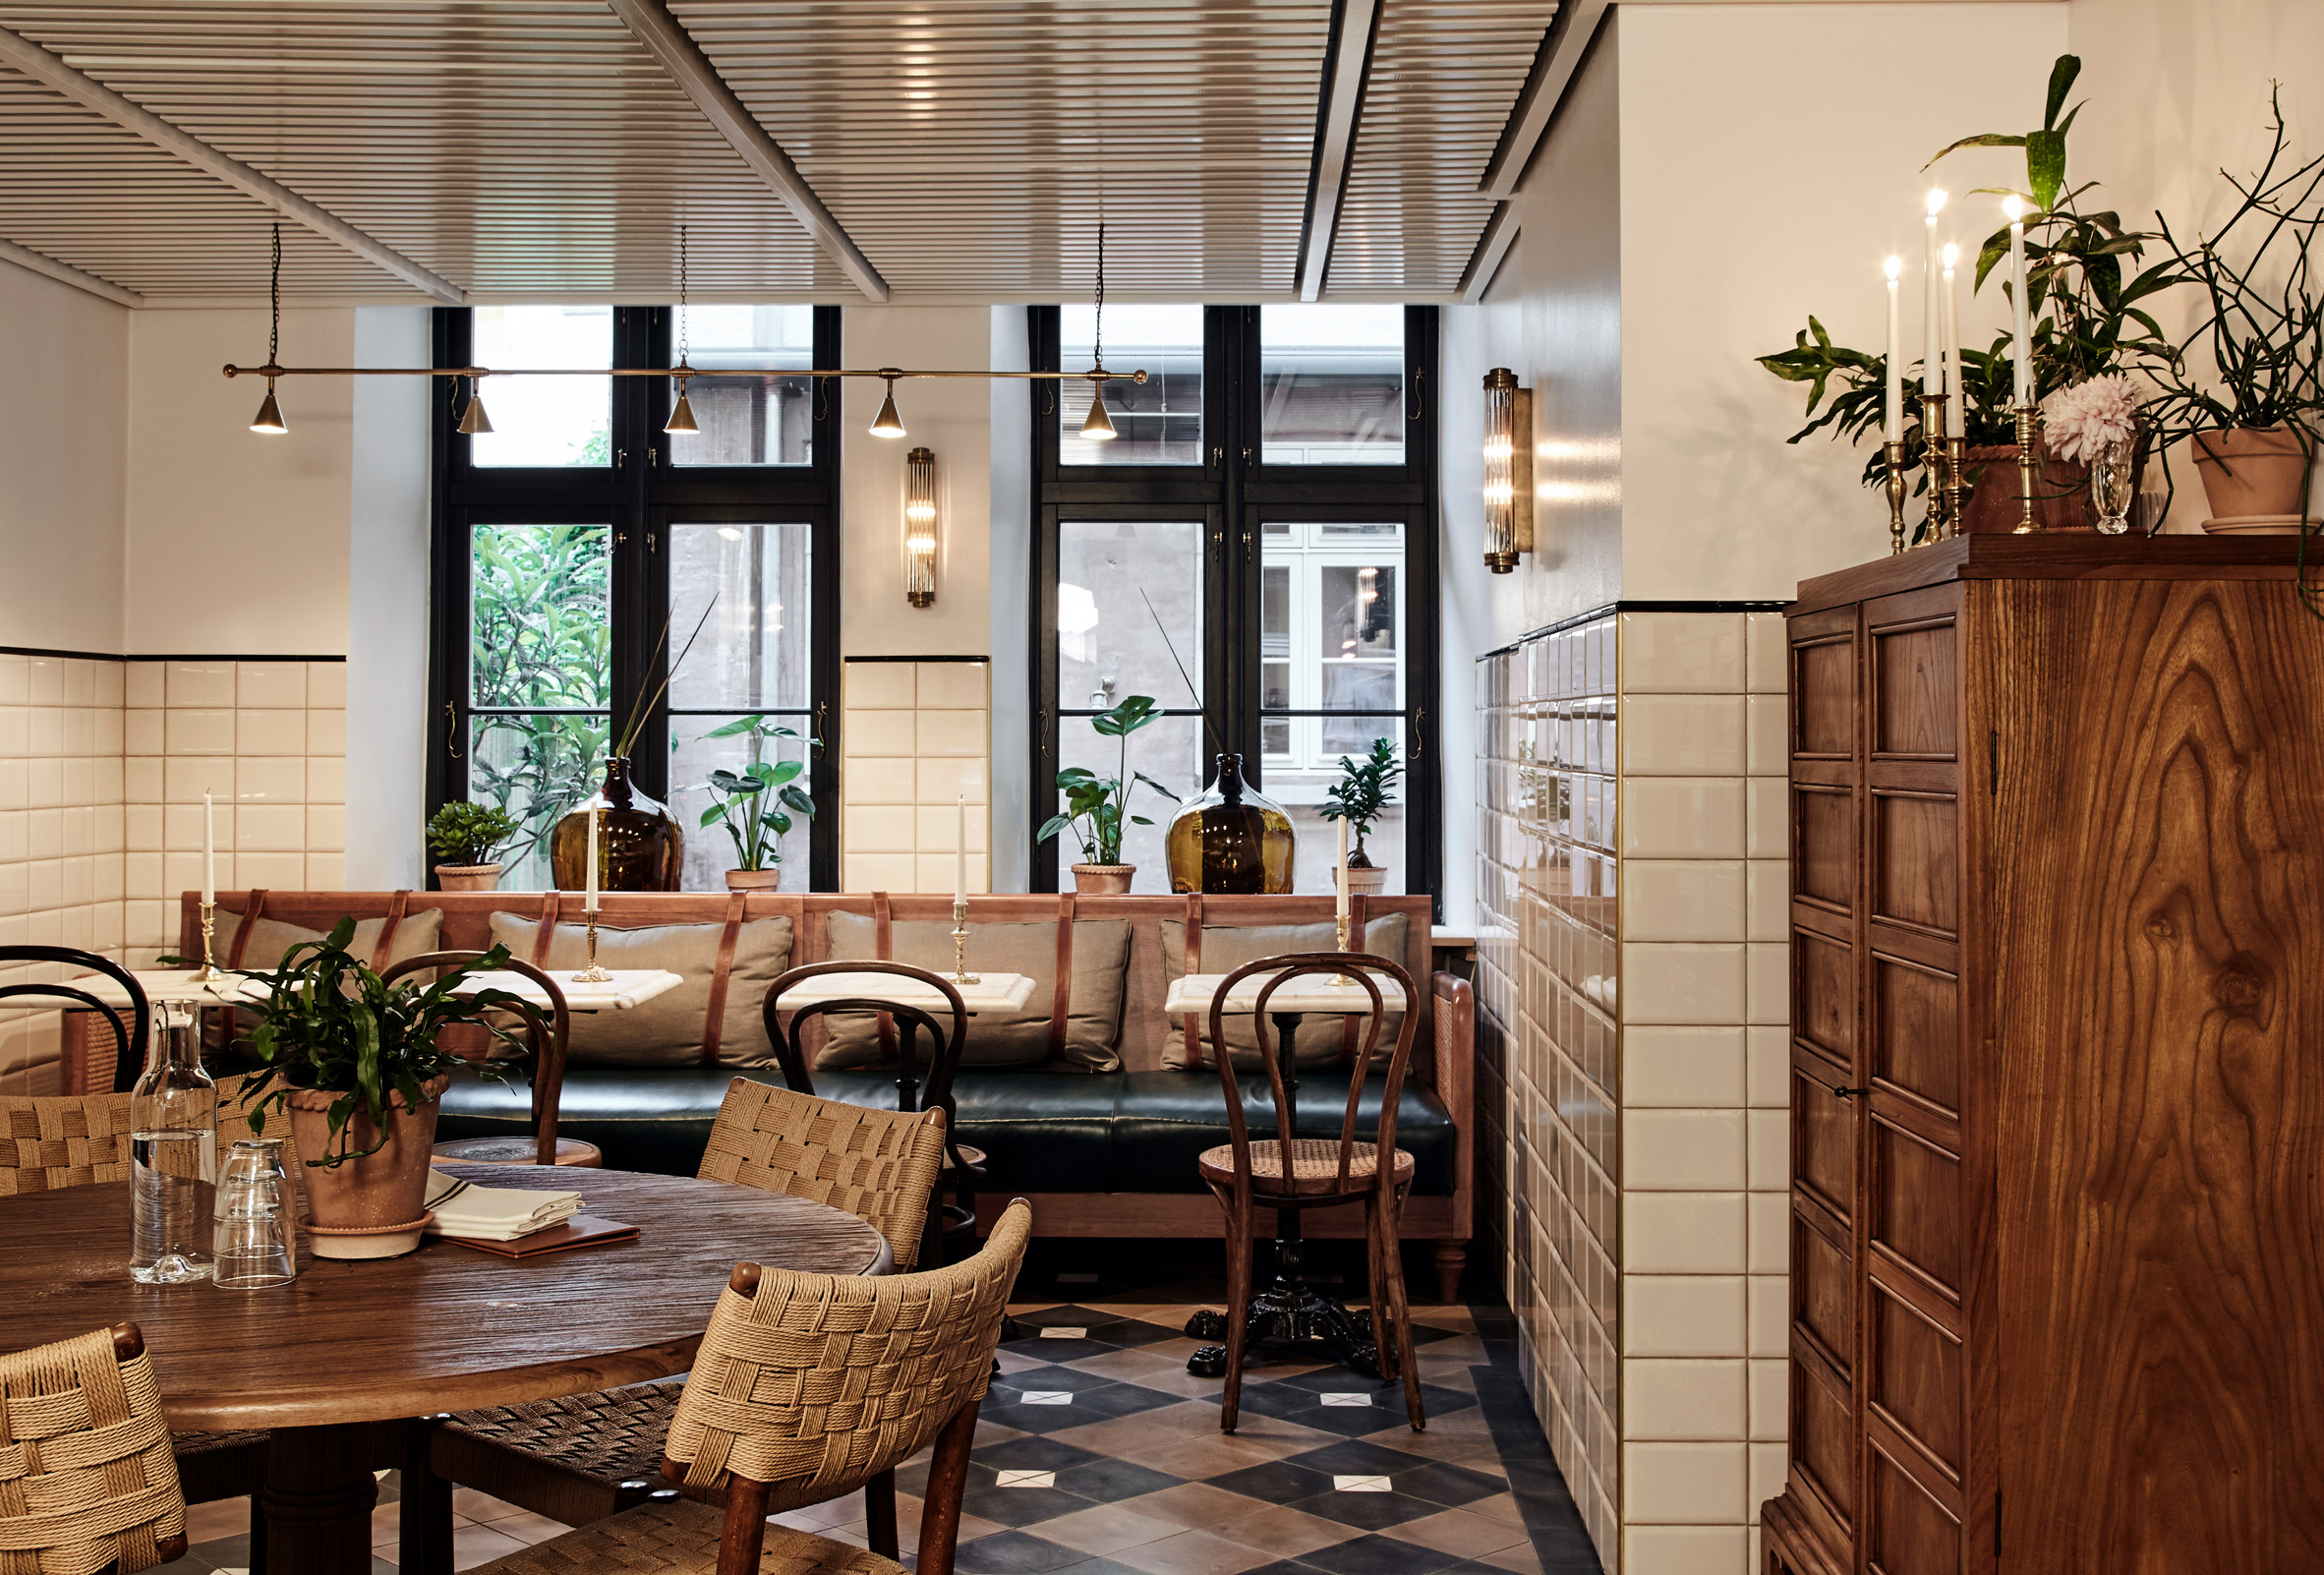 Sanders Kitchen, a deli-cafe at Hotel Sanders in Copenhagen, designed by Lind + Almond